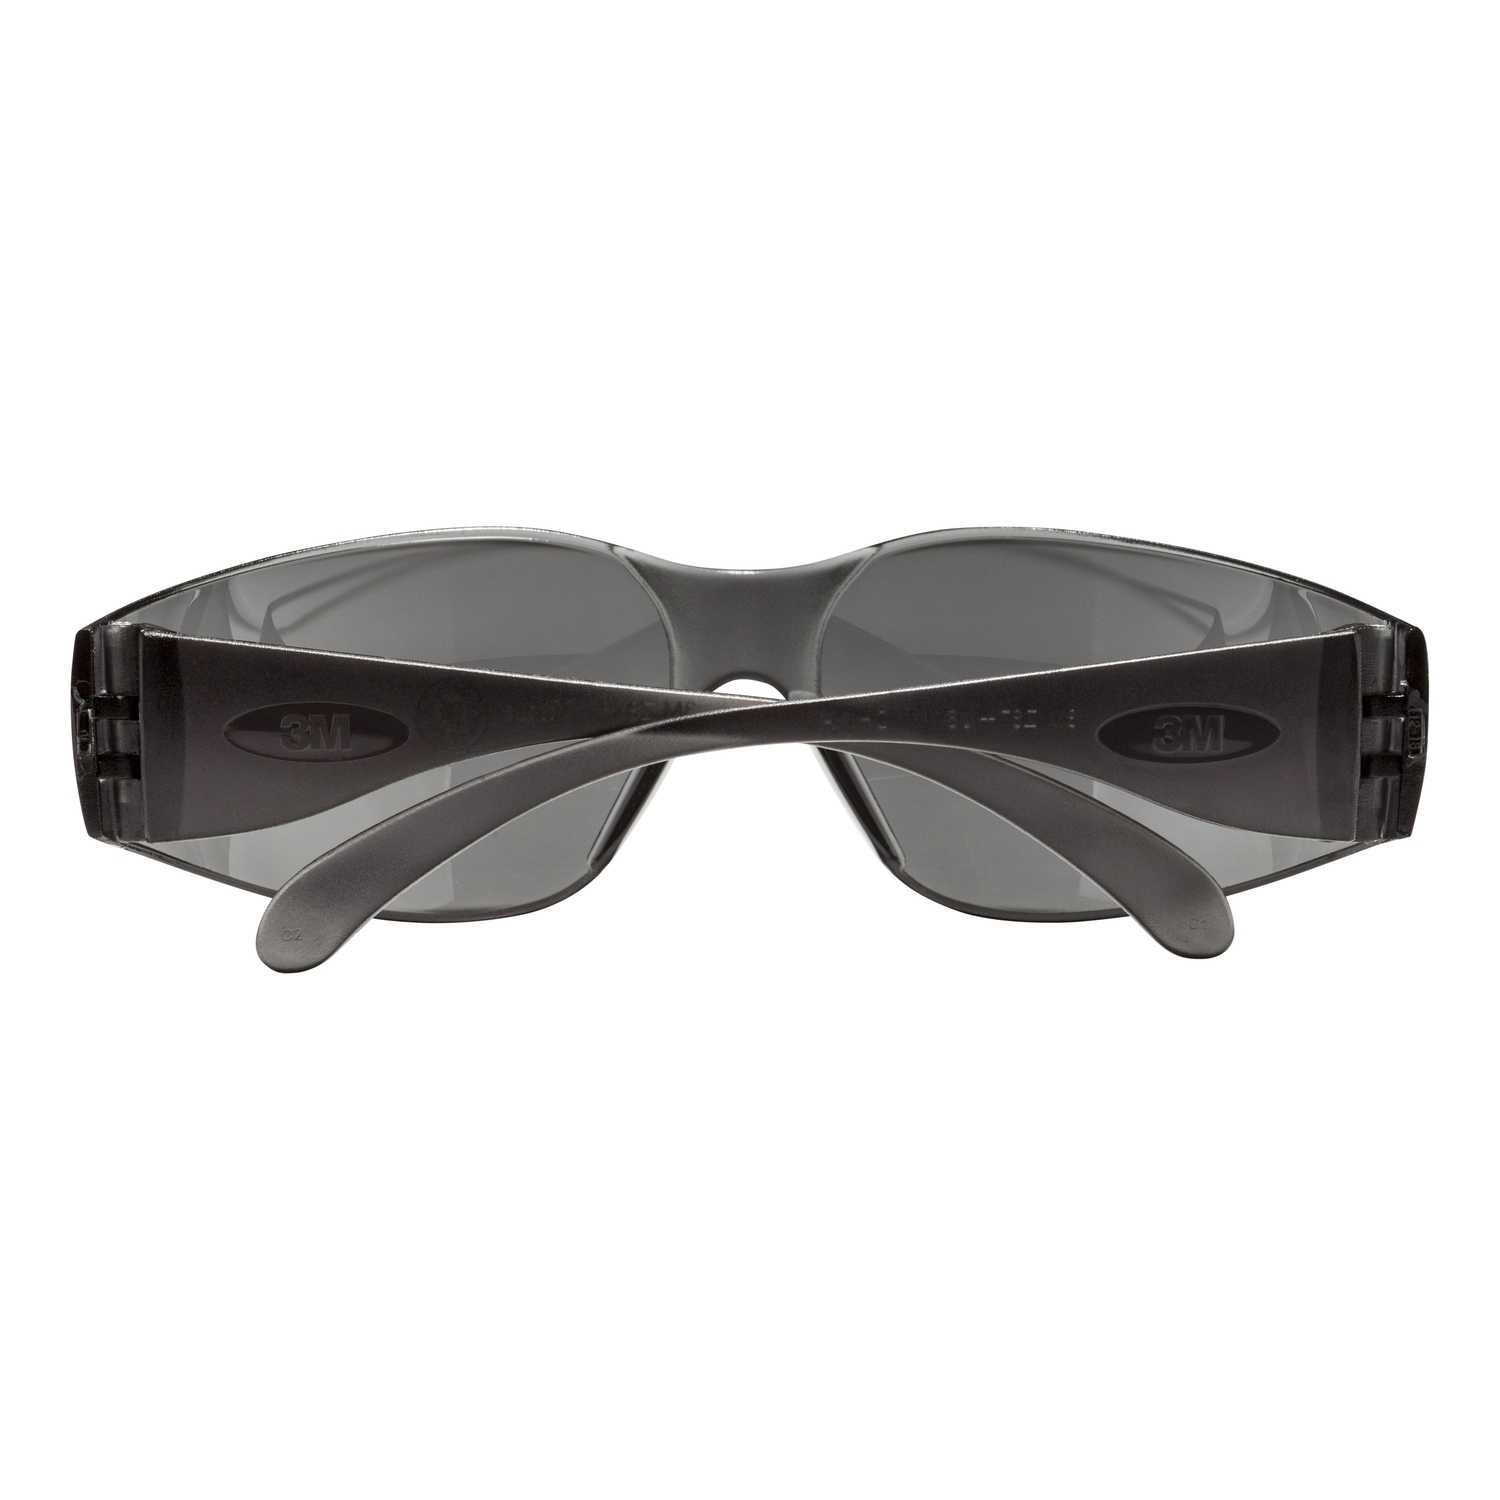 3M Safety Glasses Gray Lens Gray Frame 1 pc. - Ace Hardware